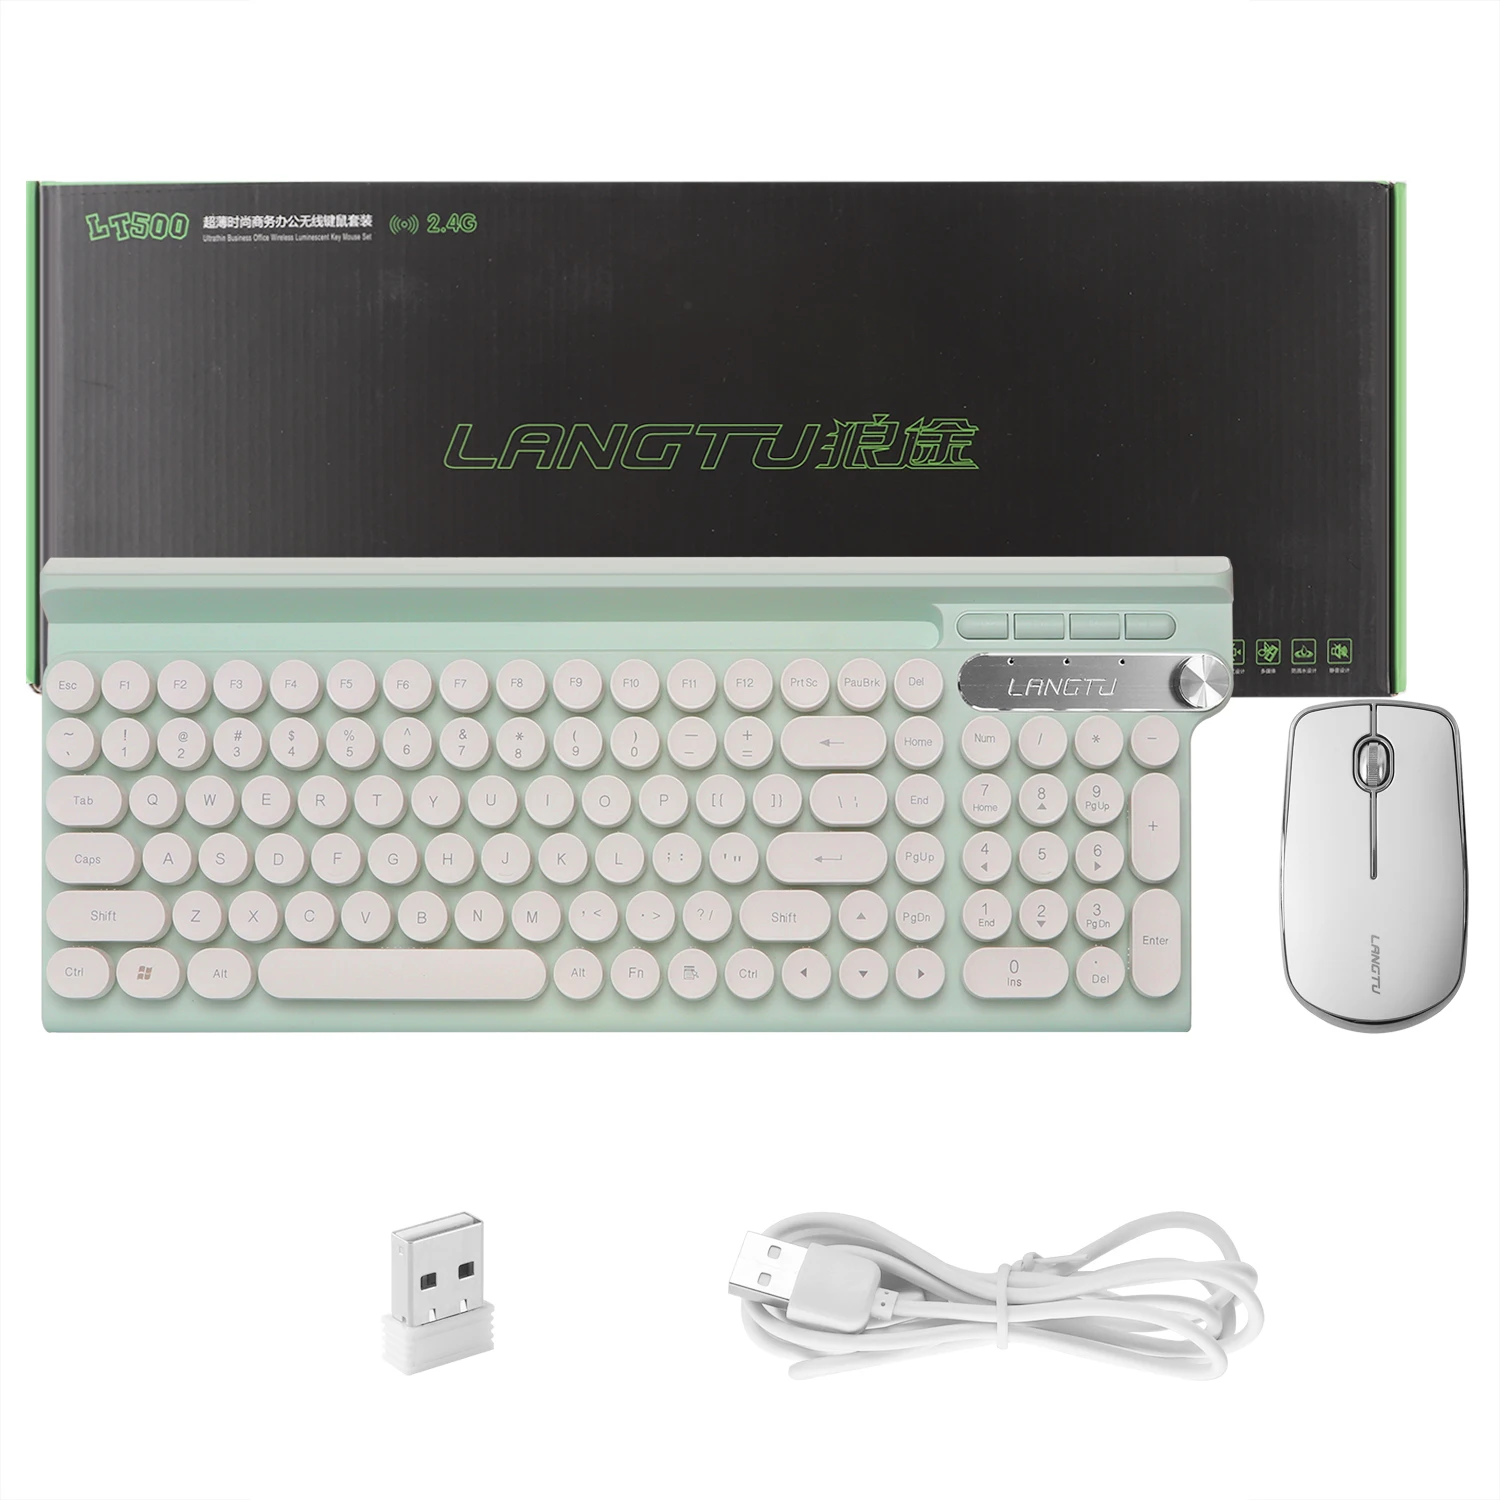 

LT500 Silent Wireless Keyboard with Mouse Combo 102 Keys Keypad Rechargeable 1600 DPI Ergonomic Mause for Desktop PC Laptop Gift